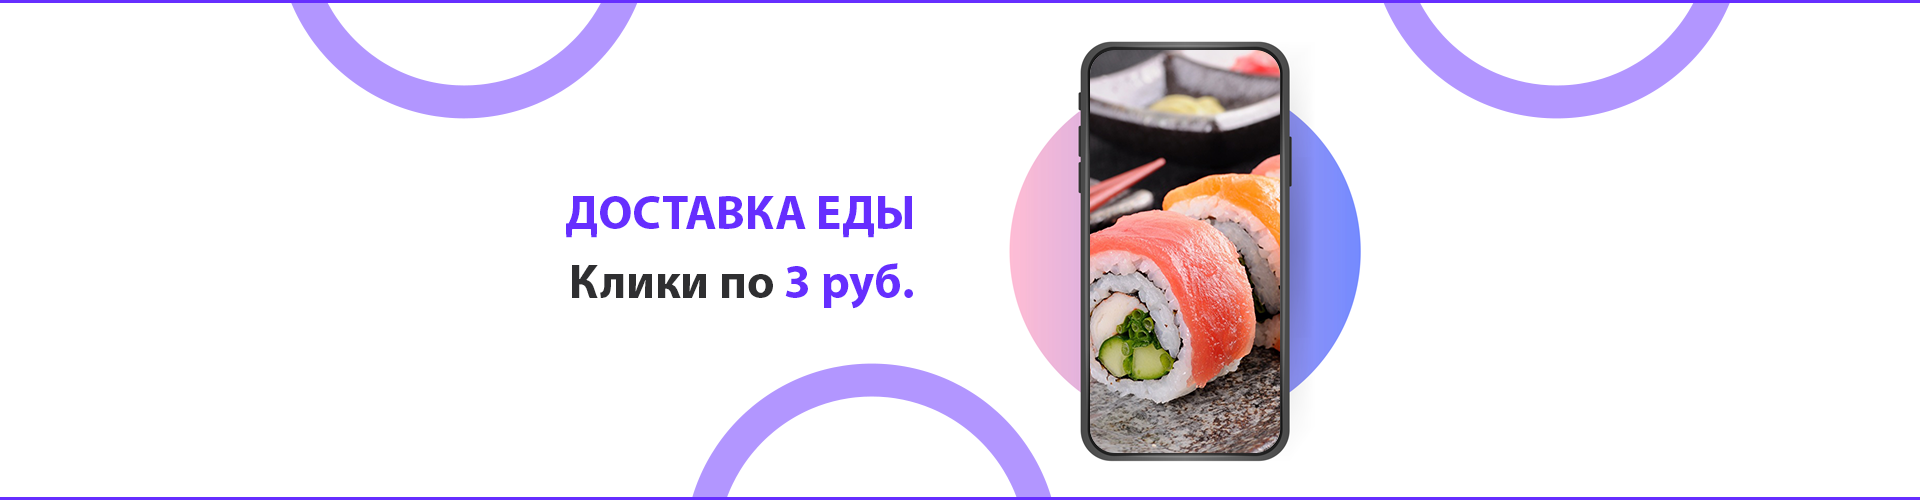 Служба доставки еды Fast'n Roll — продвижение ВКонтакте. Клики по 3 ₽